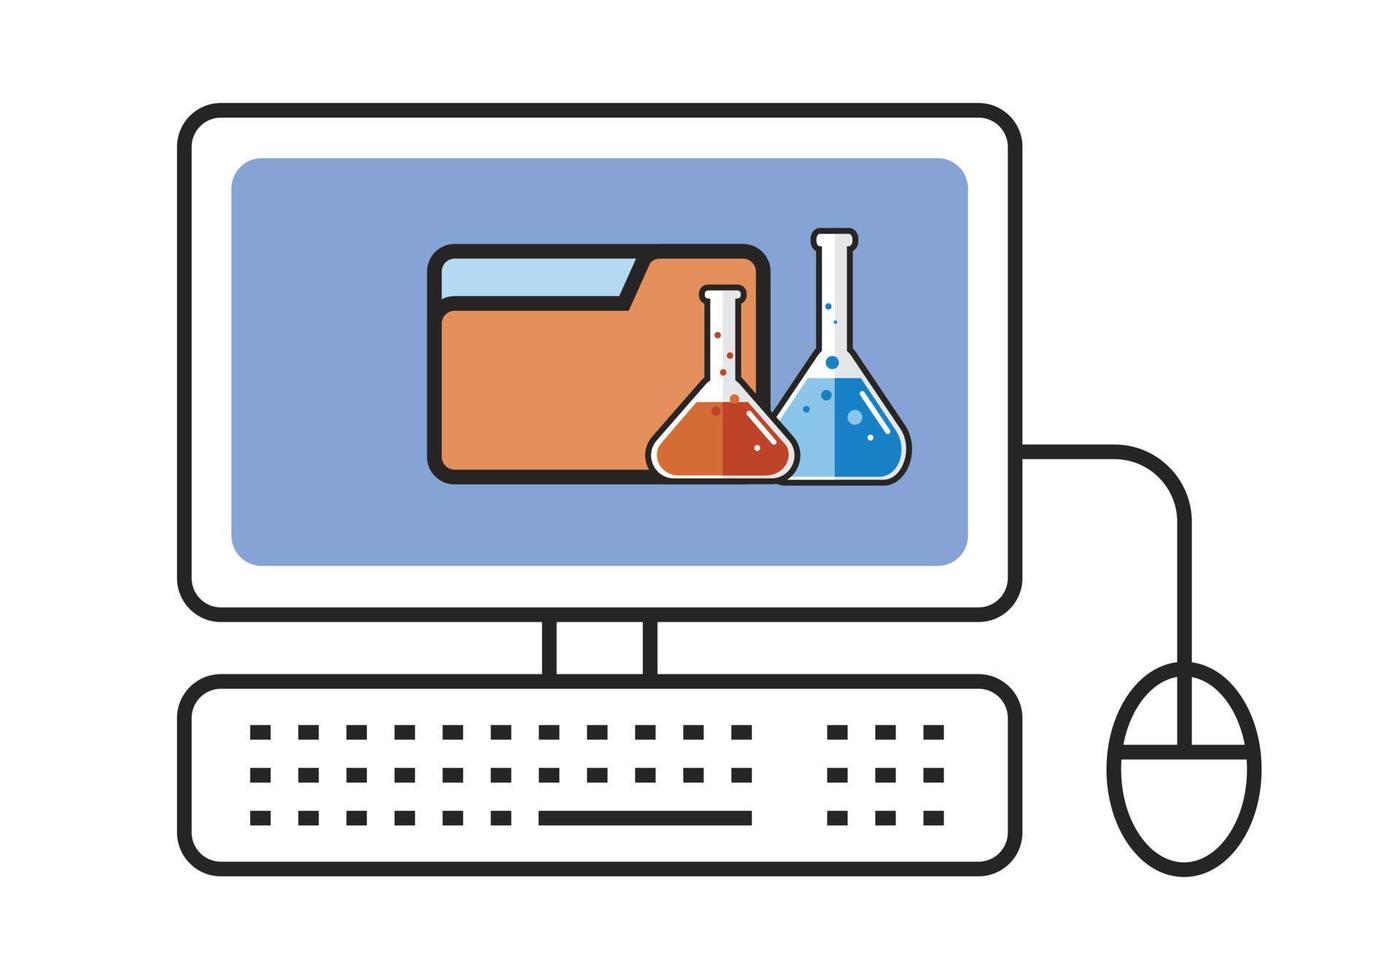 Free vector science lab and laboratory design  illustration